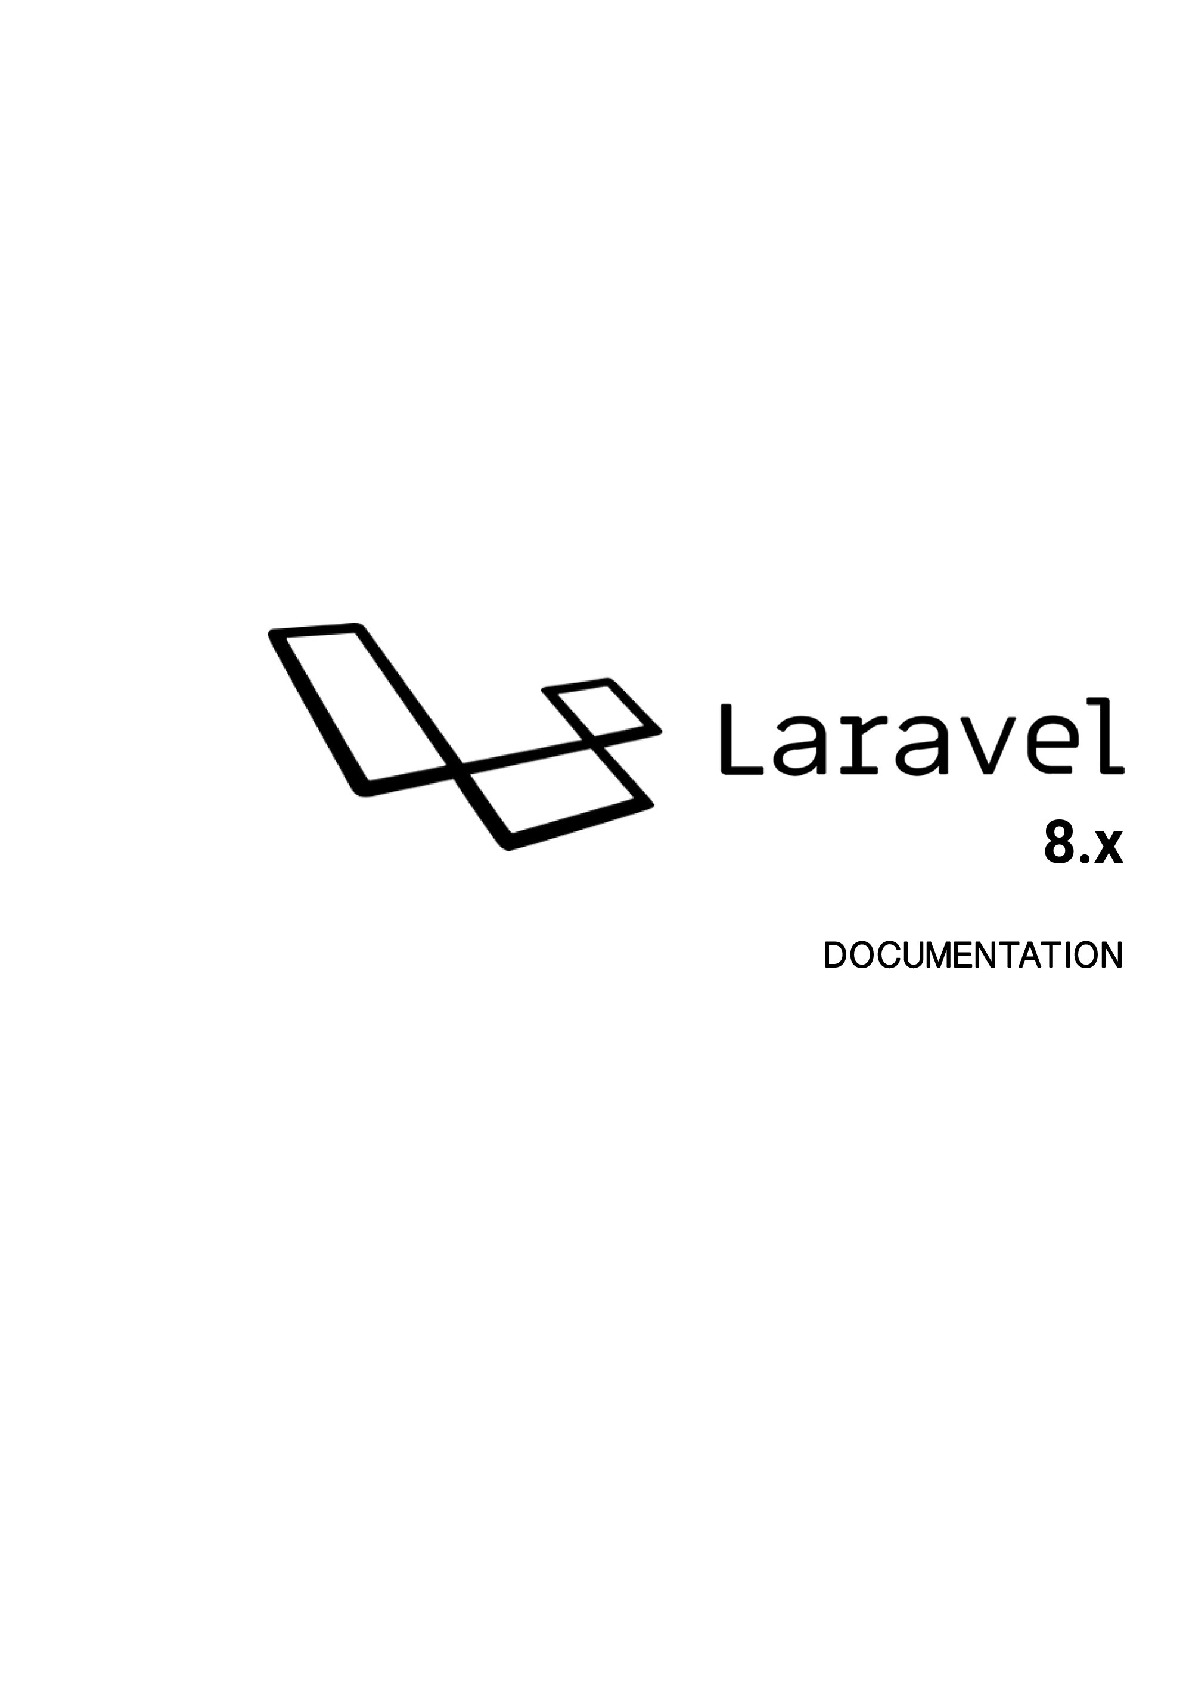 laravel-docs-8.x